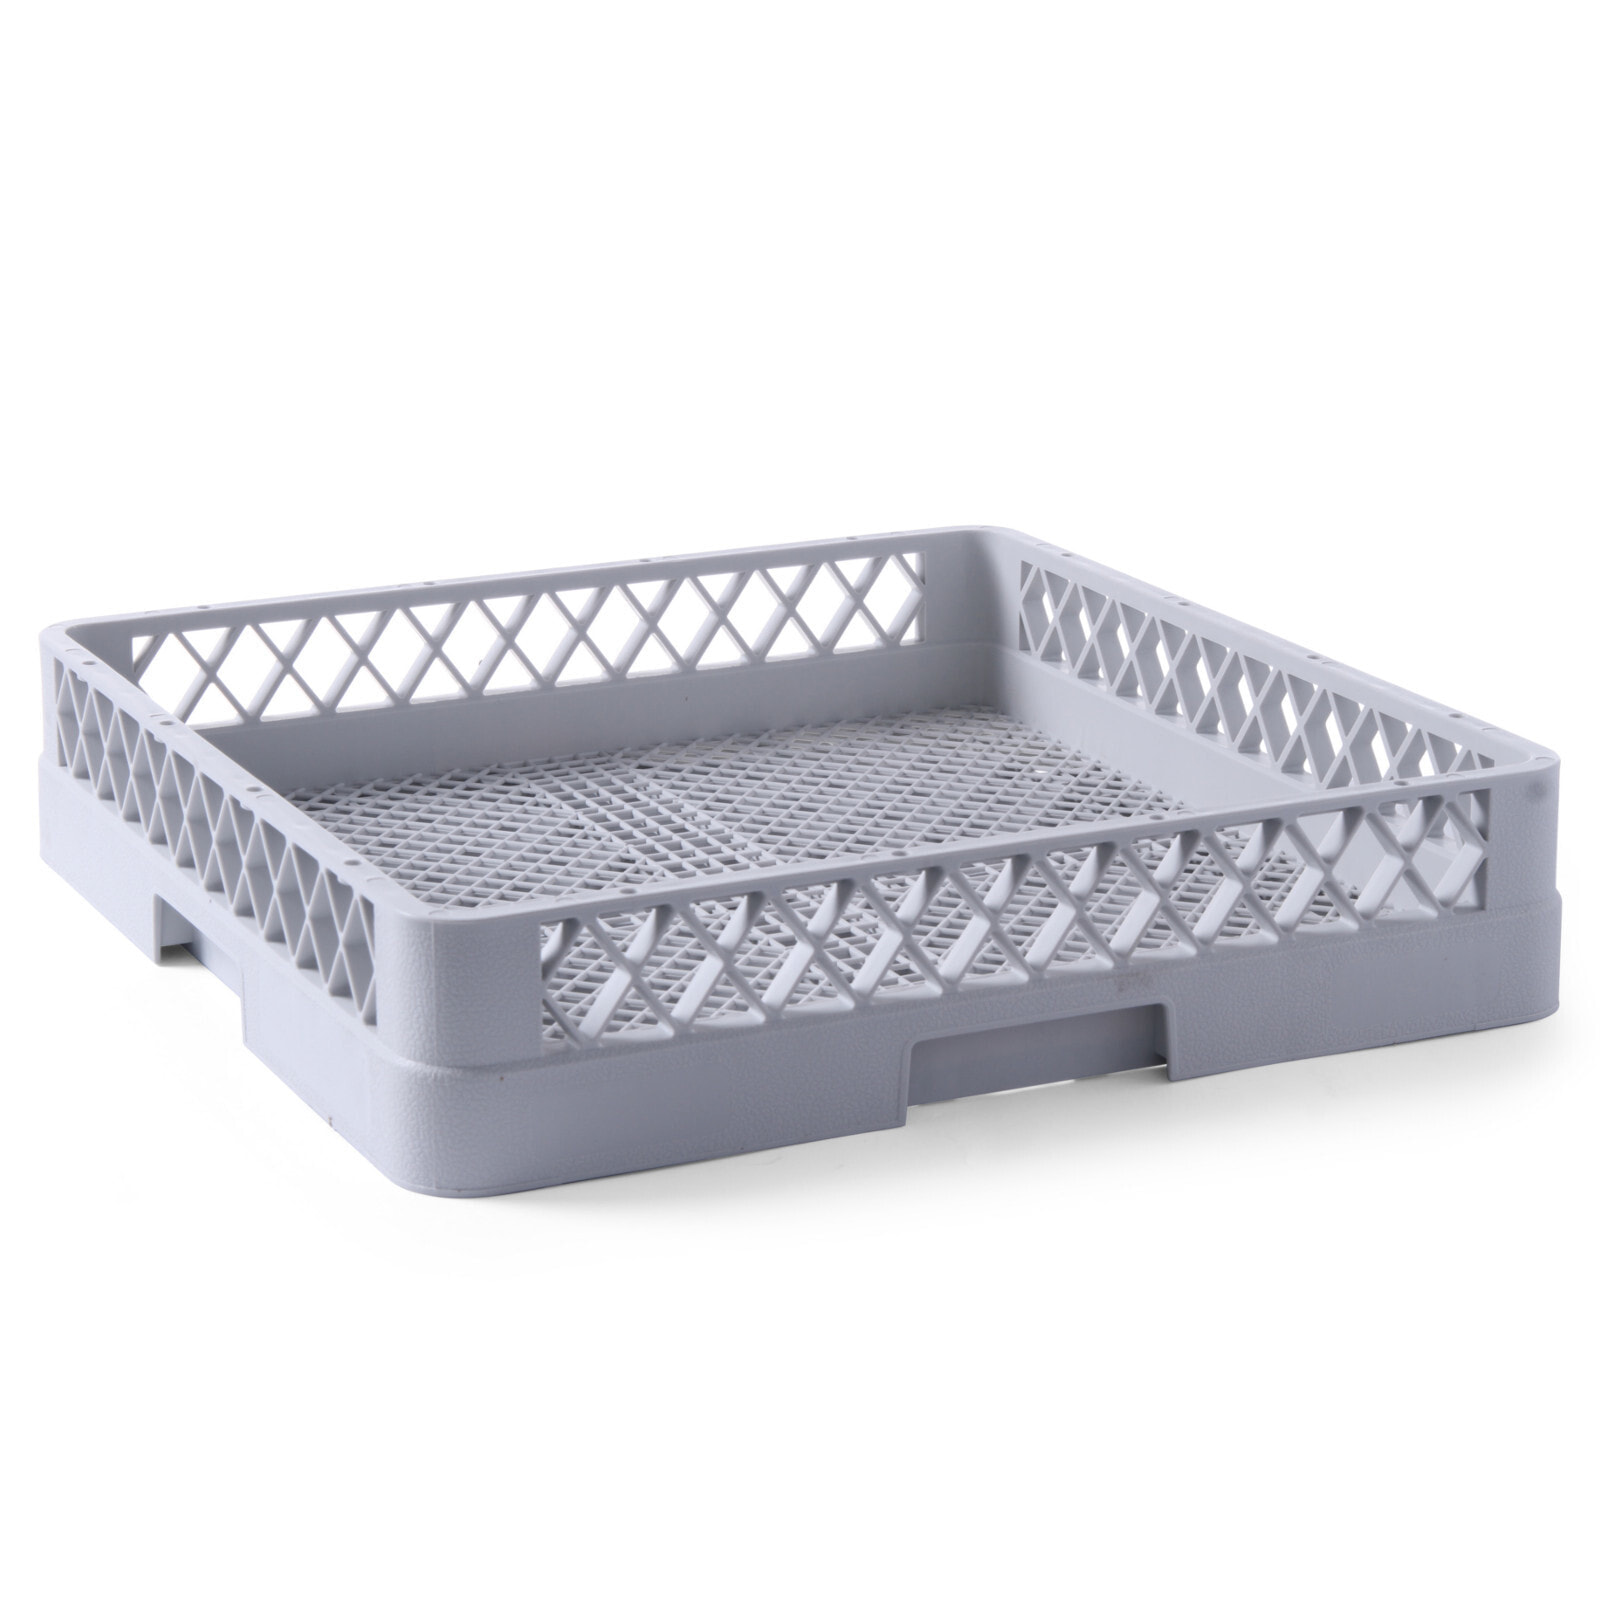 Dishwasher basket for cutlery 50x50cm - Hendi 877203